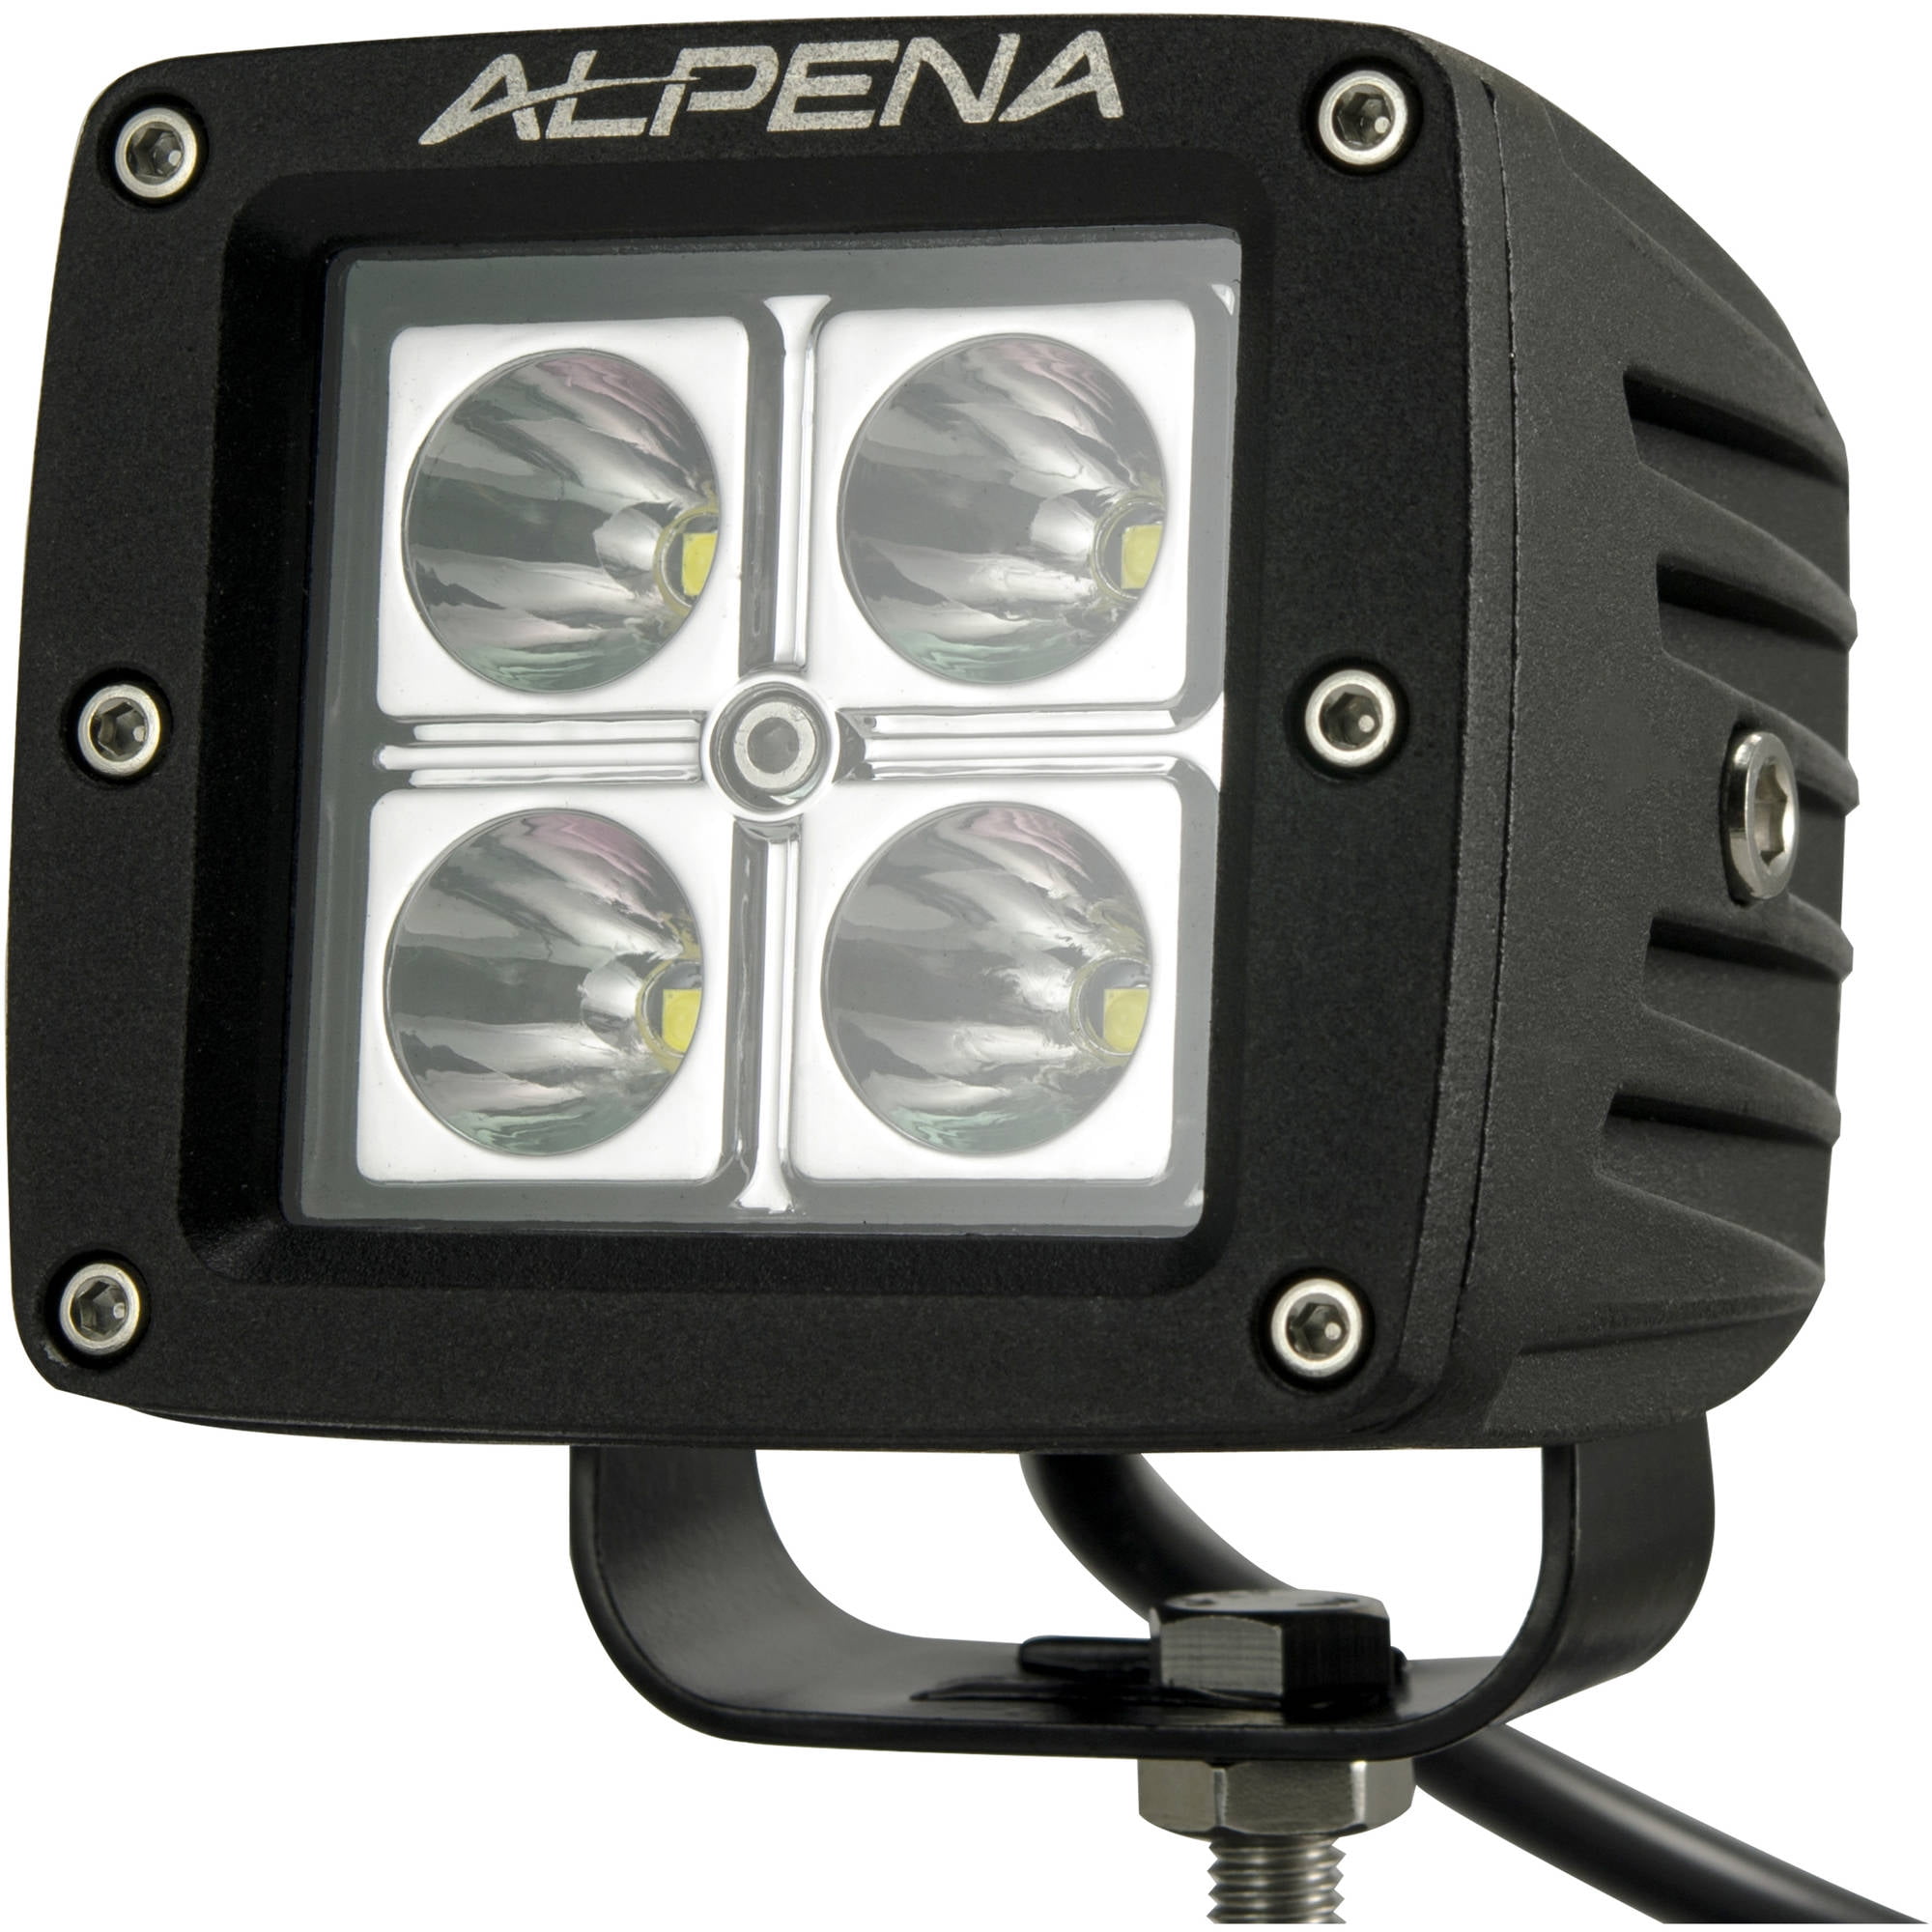 Sparks Power Alpha Series 120W LED Light External Driver Outdoors IP65